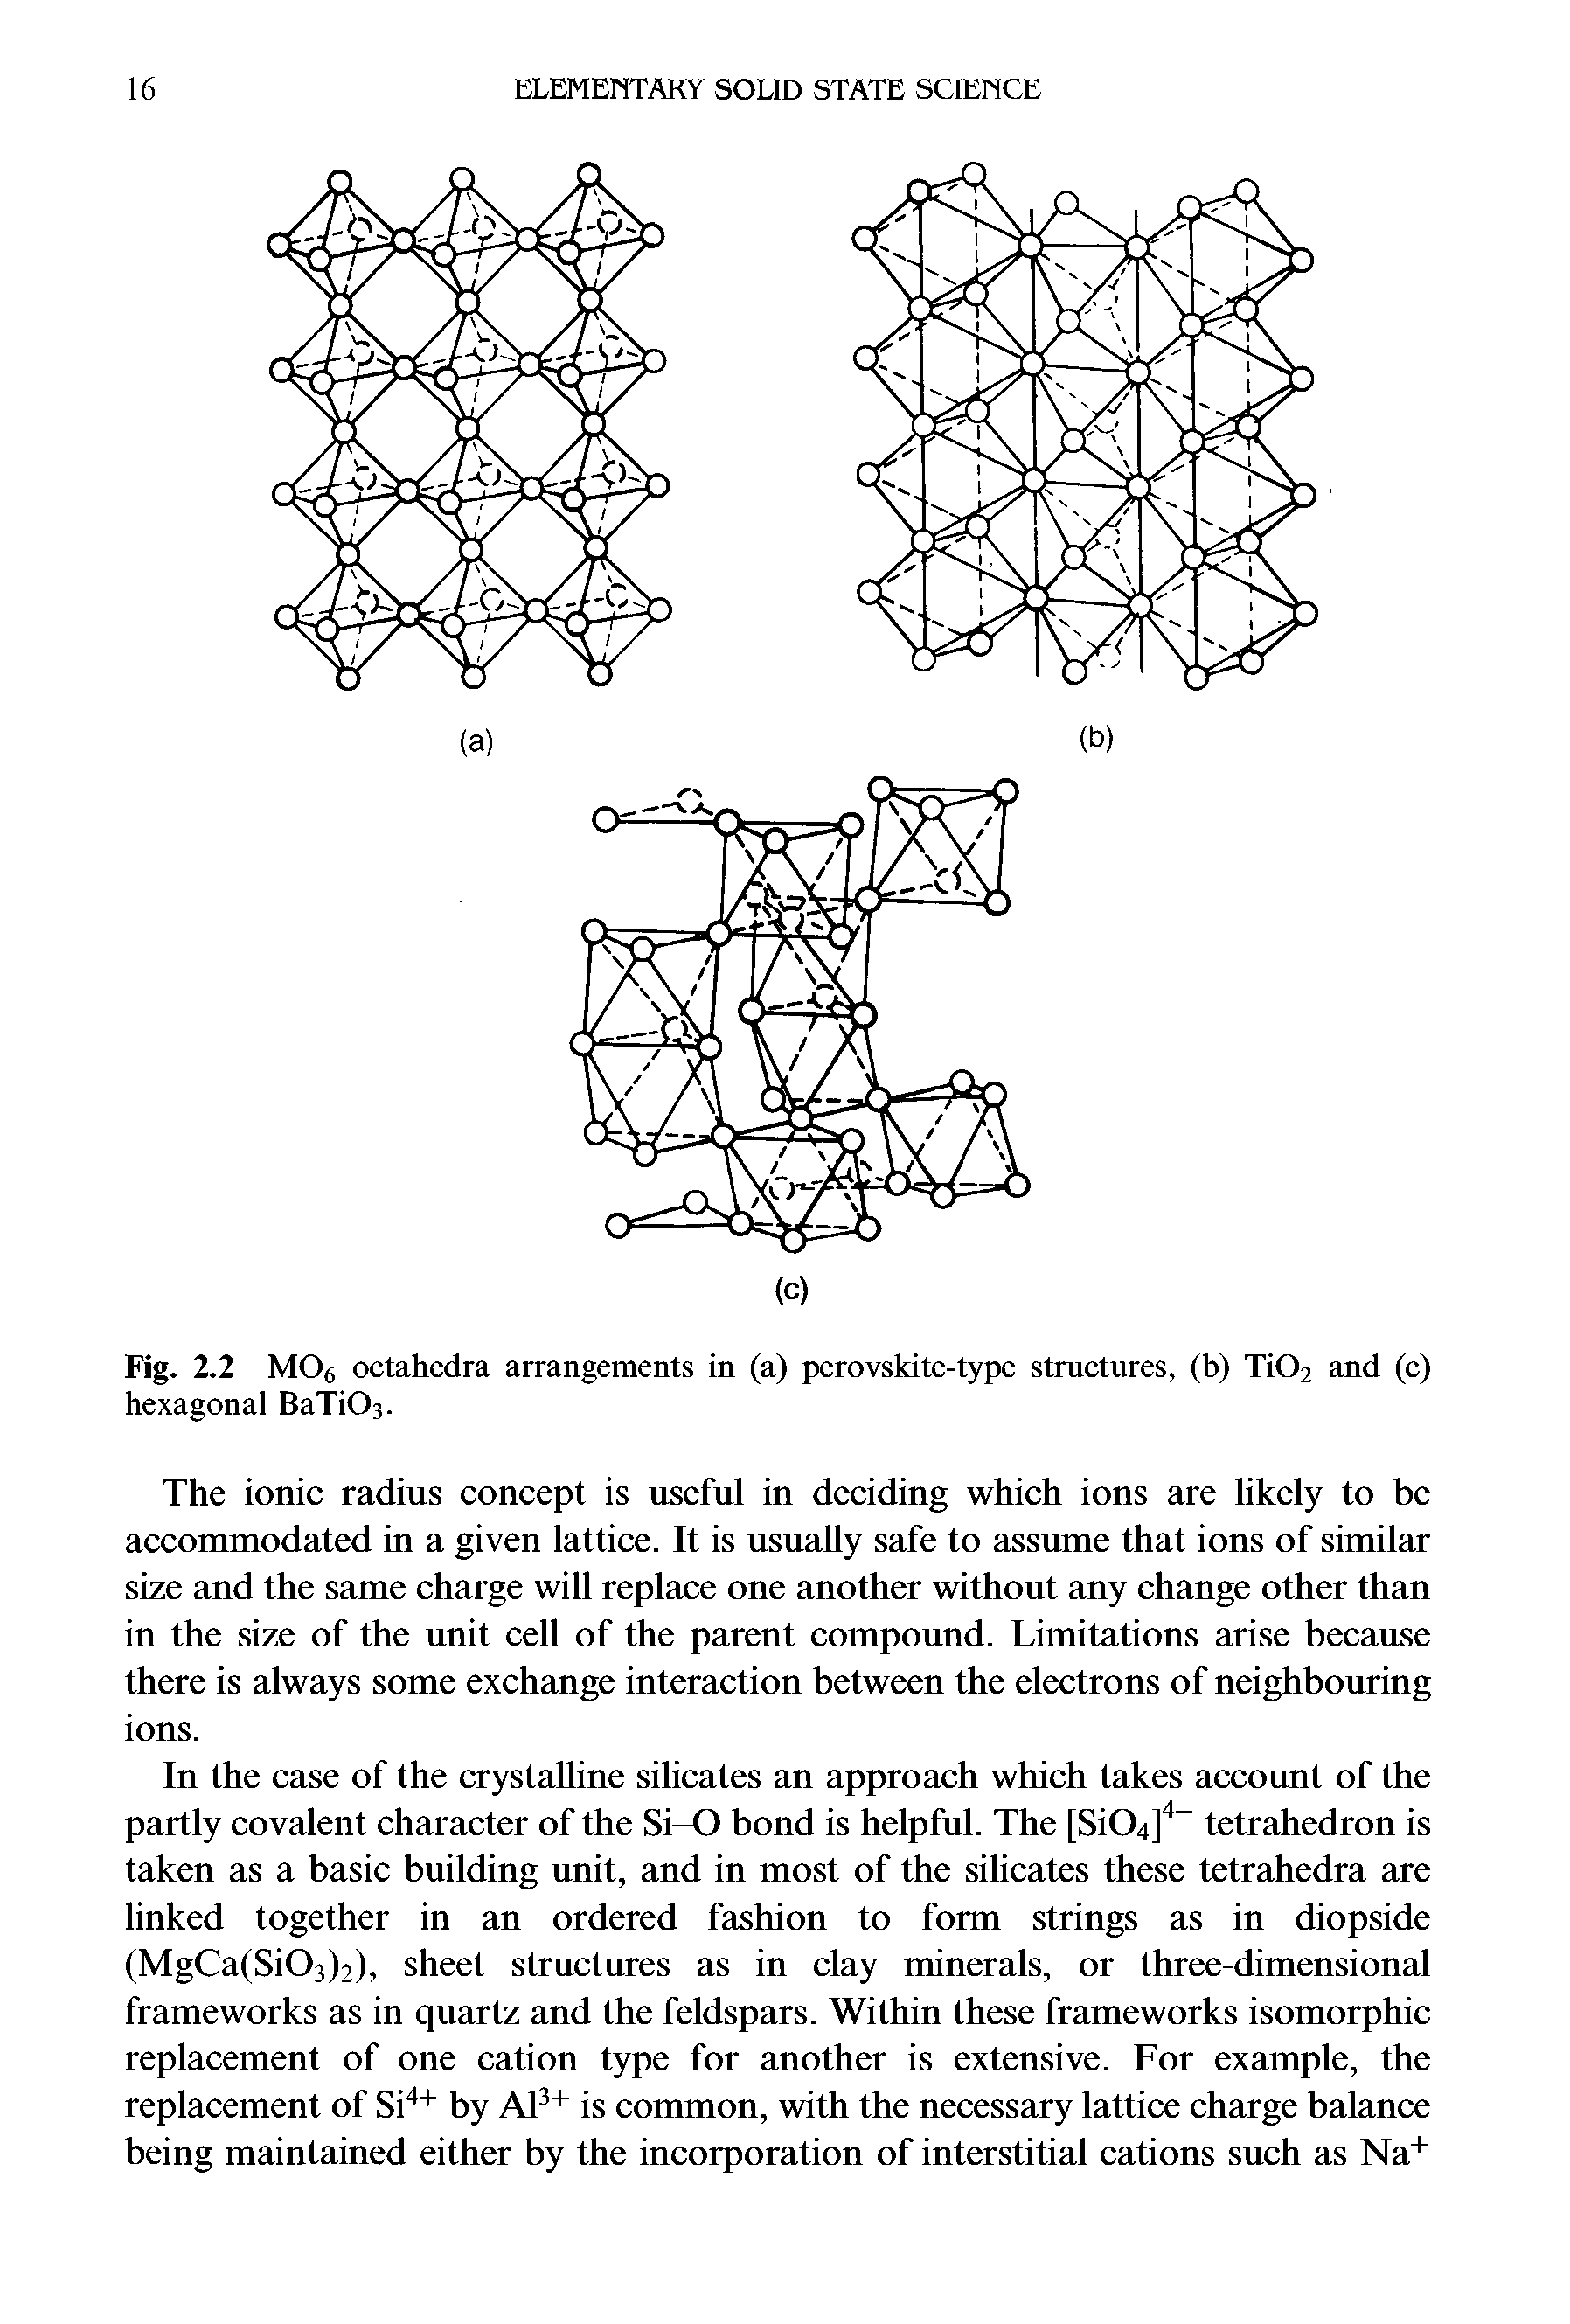 Fig. 2.2 MOg octahedra arrangements in (a) perovskite-type structures, (b) Ti02 and (c) hexagonal BaTiOs.